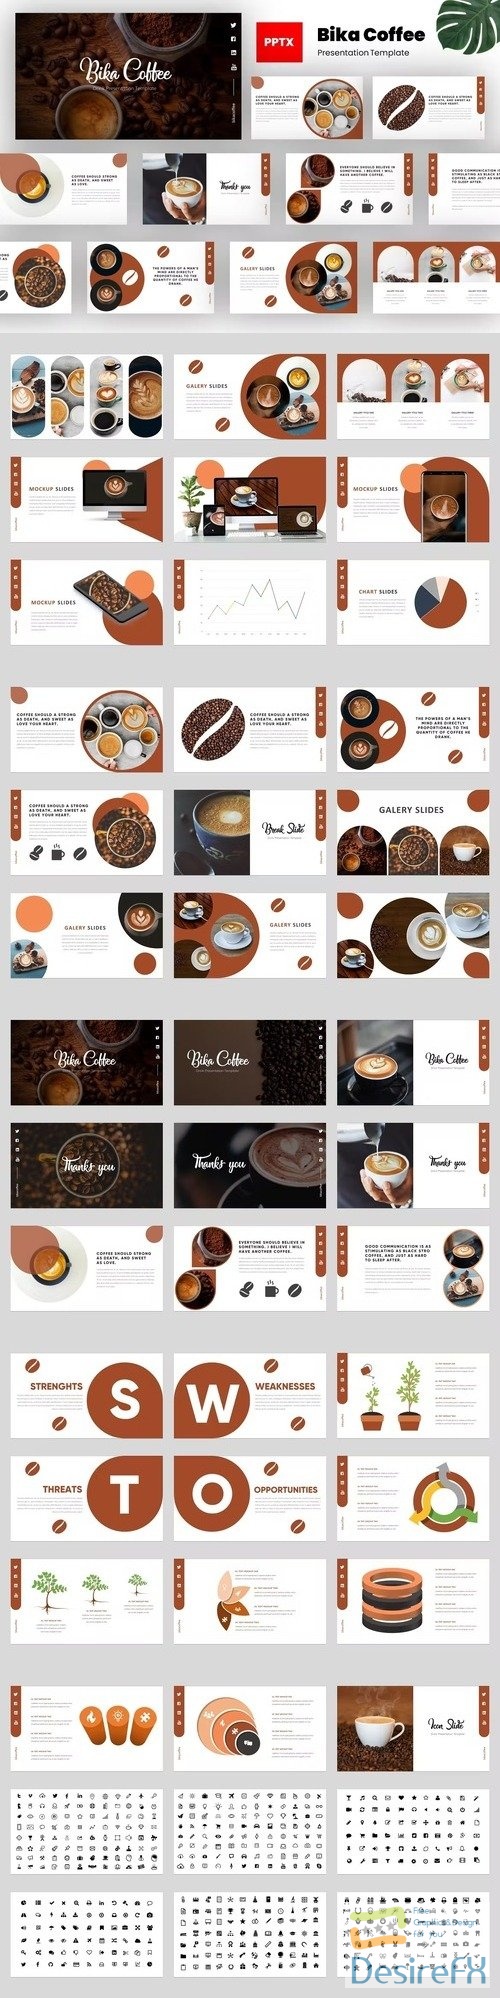 Bika Coffee - Coffee Shop Powerpoint Template